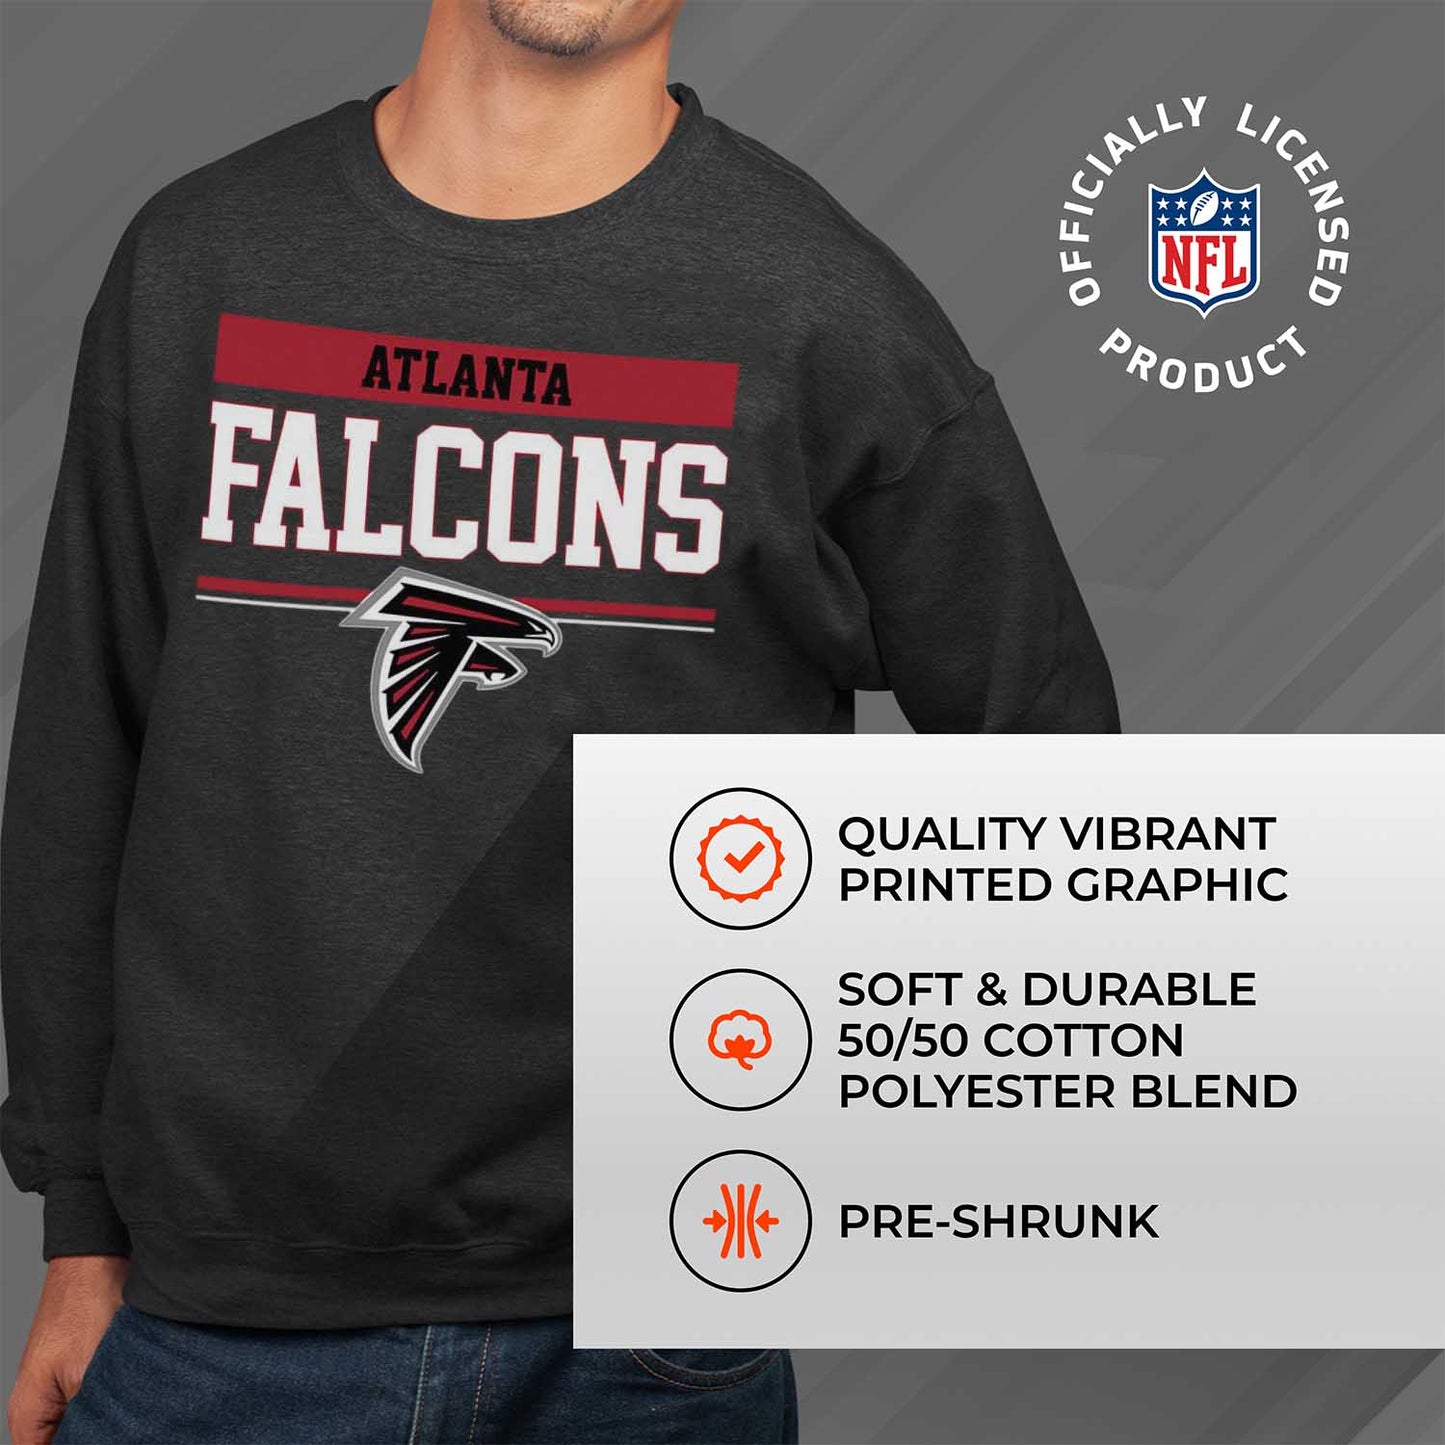 Atlanta Falcons NFL Adult Long Sleeve Team Block Charcoal Crewneck Sweatshirt - Charcoal